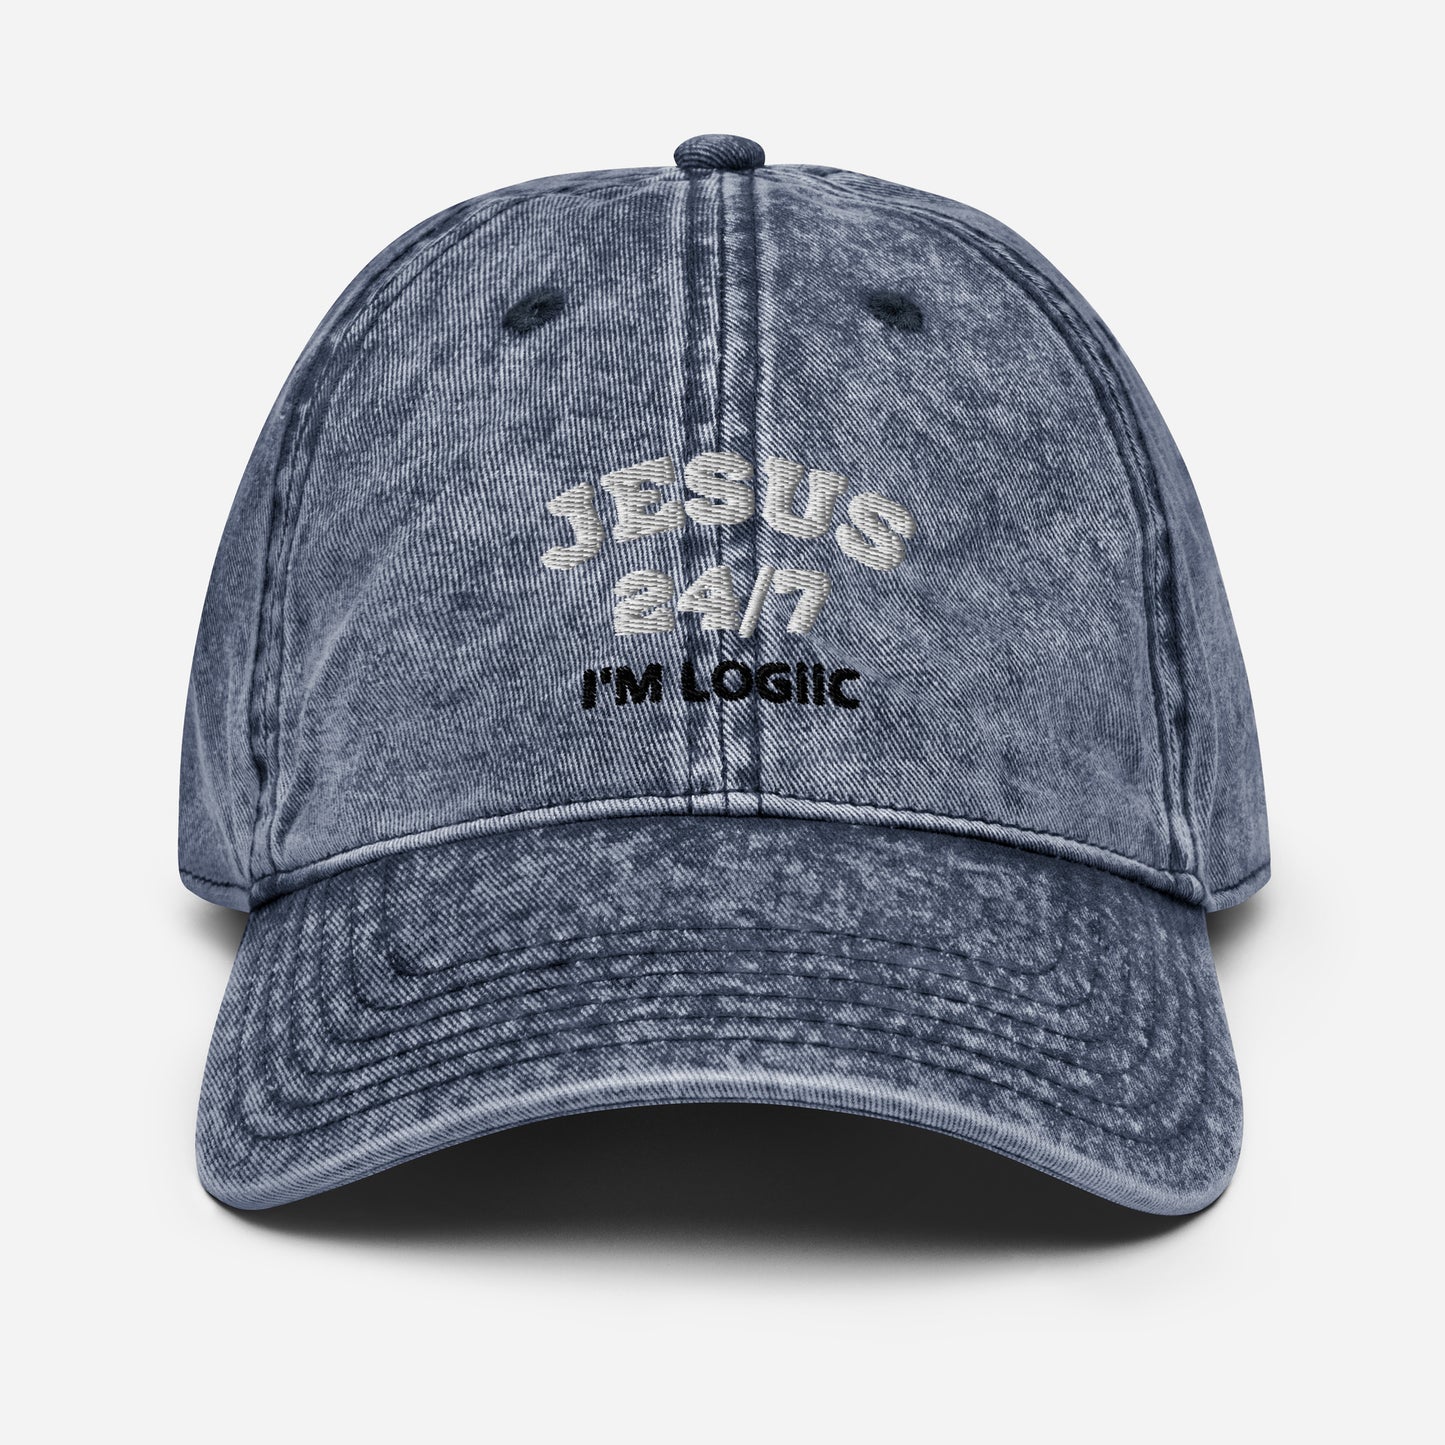 Jesus 24/7 Embroidery Vintage Cotton Twill Cap - Navy - Hats